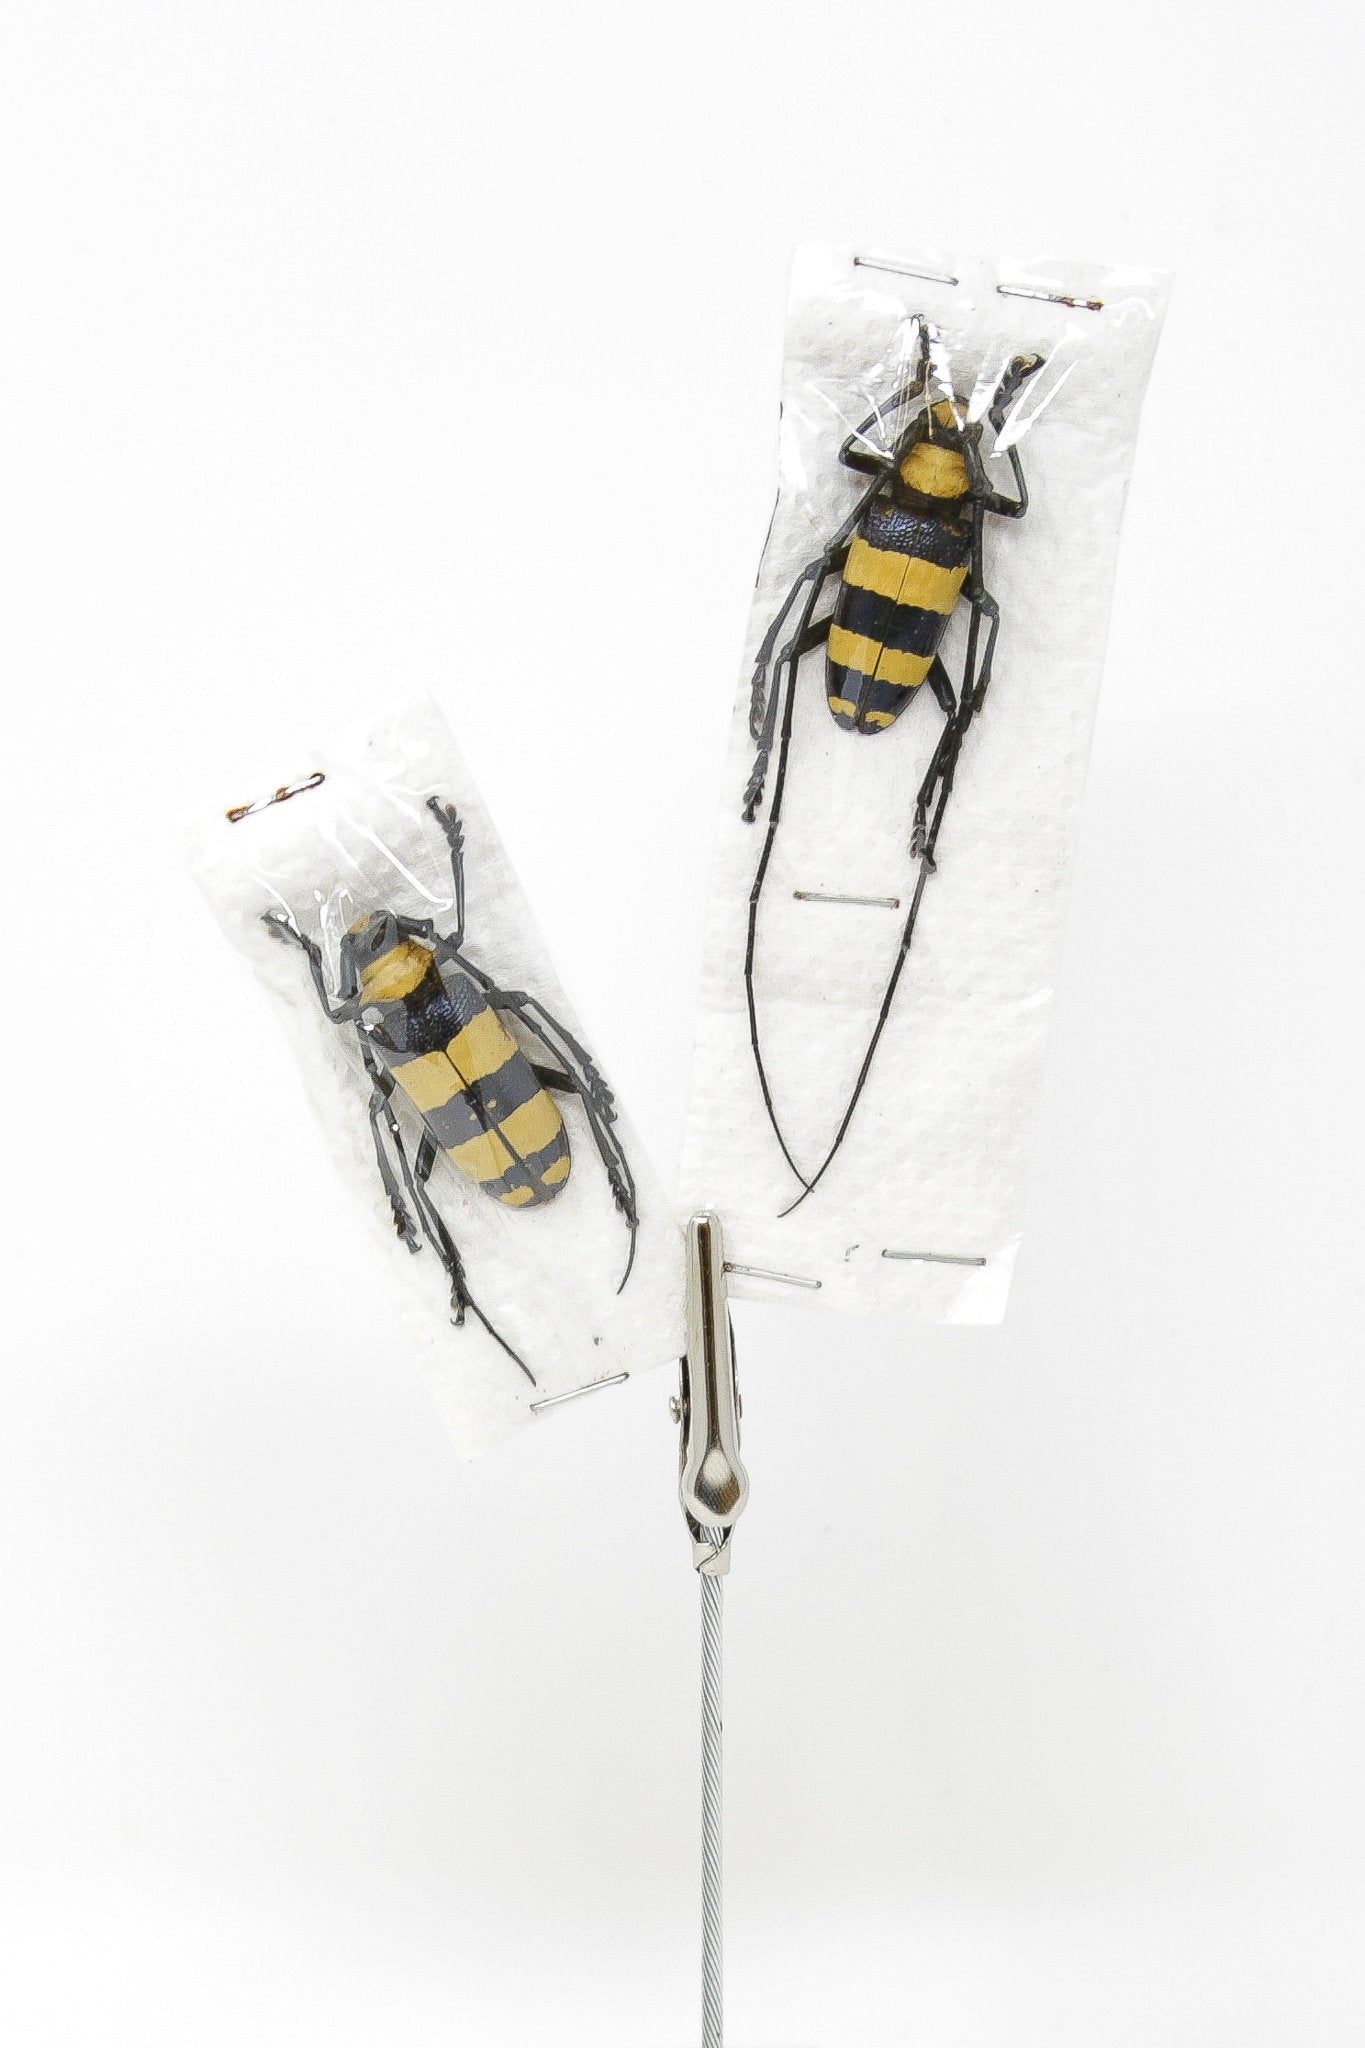 1 x Sexed Pair - Nemophas bifasciata | Longhorn Beetles | A1 Unmounted Insect Specimens